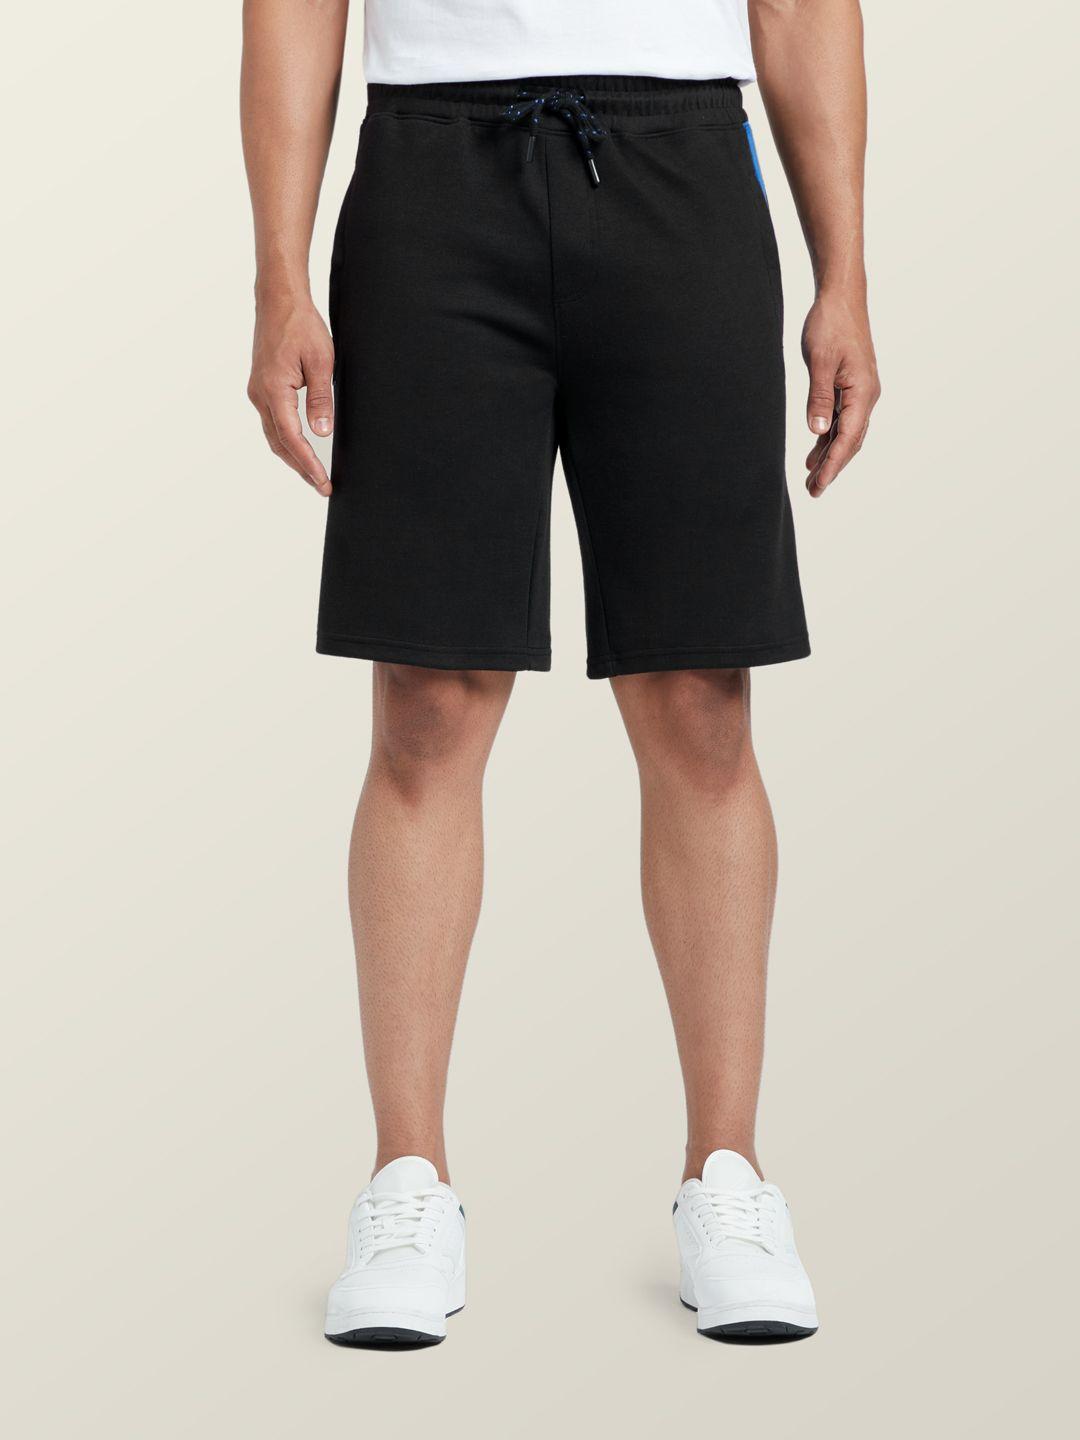 xyxx men black solid outdoor sports shorts